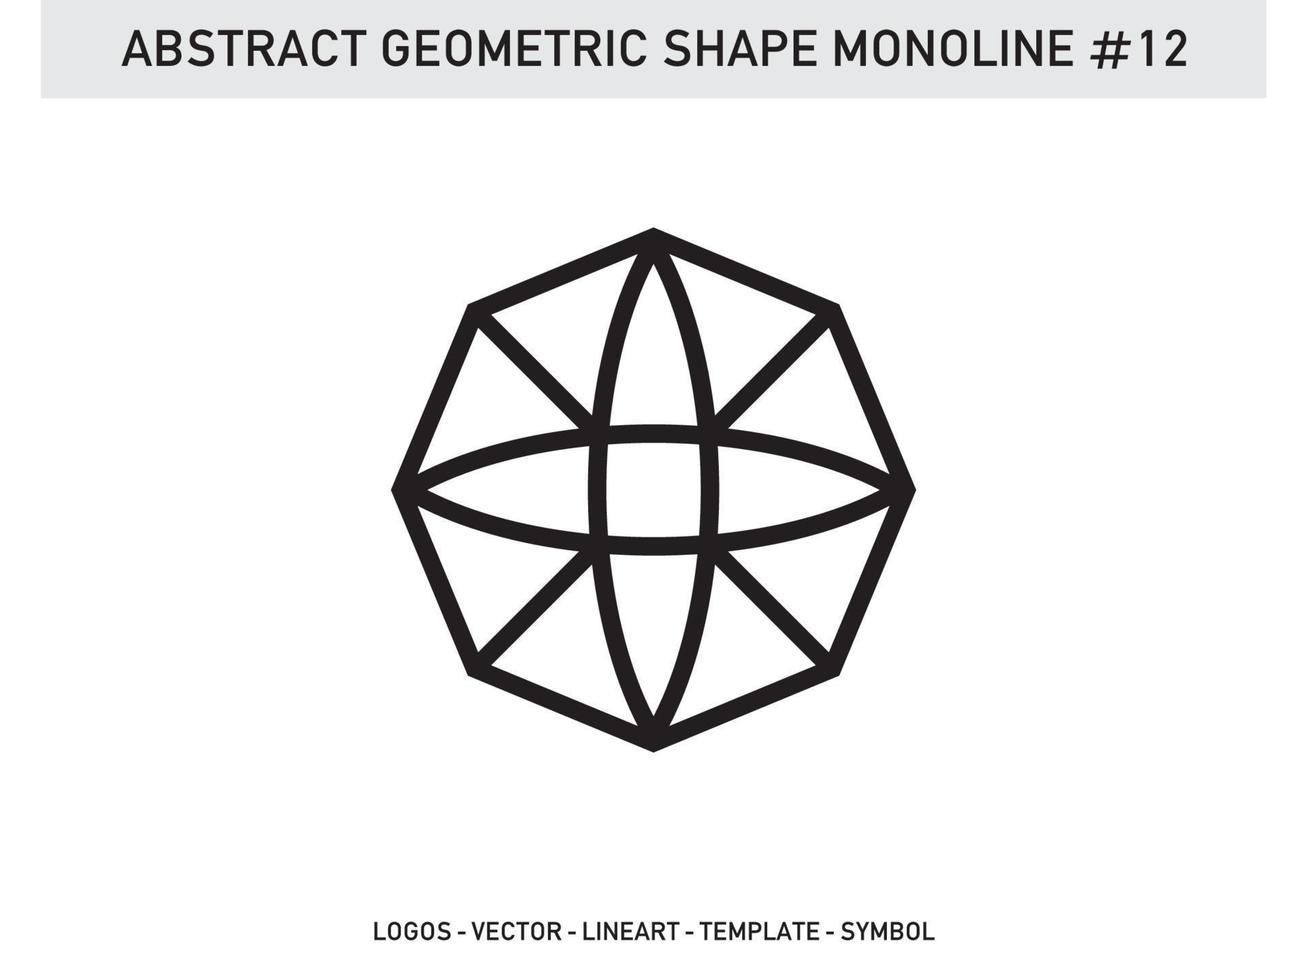 Monoline Lineart Geometric Abstract Shape Pattern Seamless Free vector